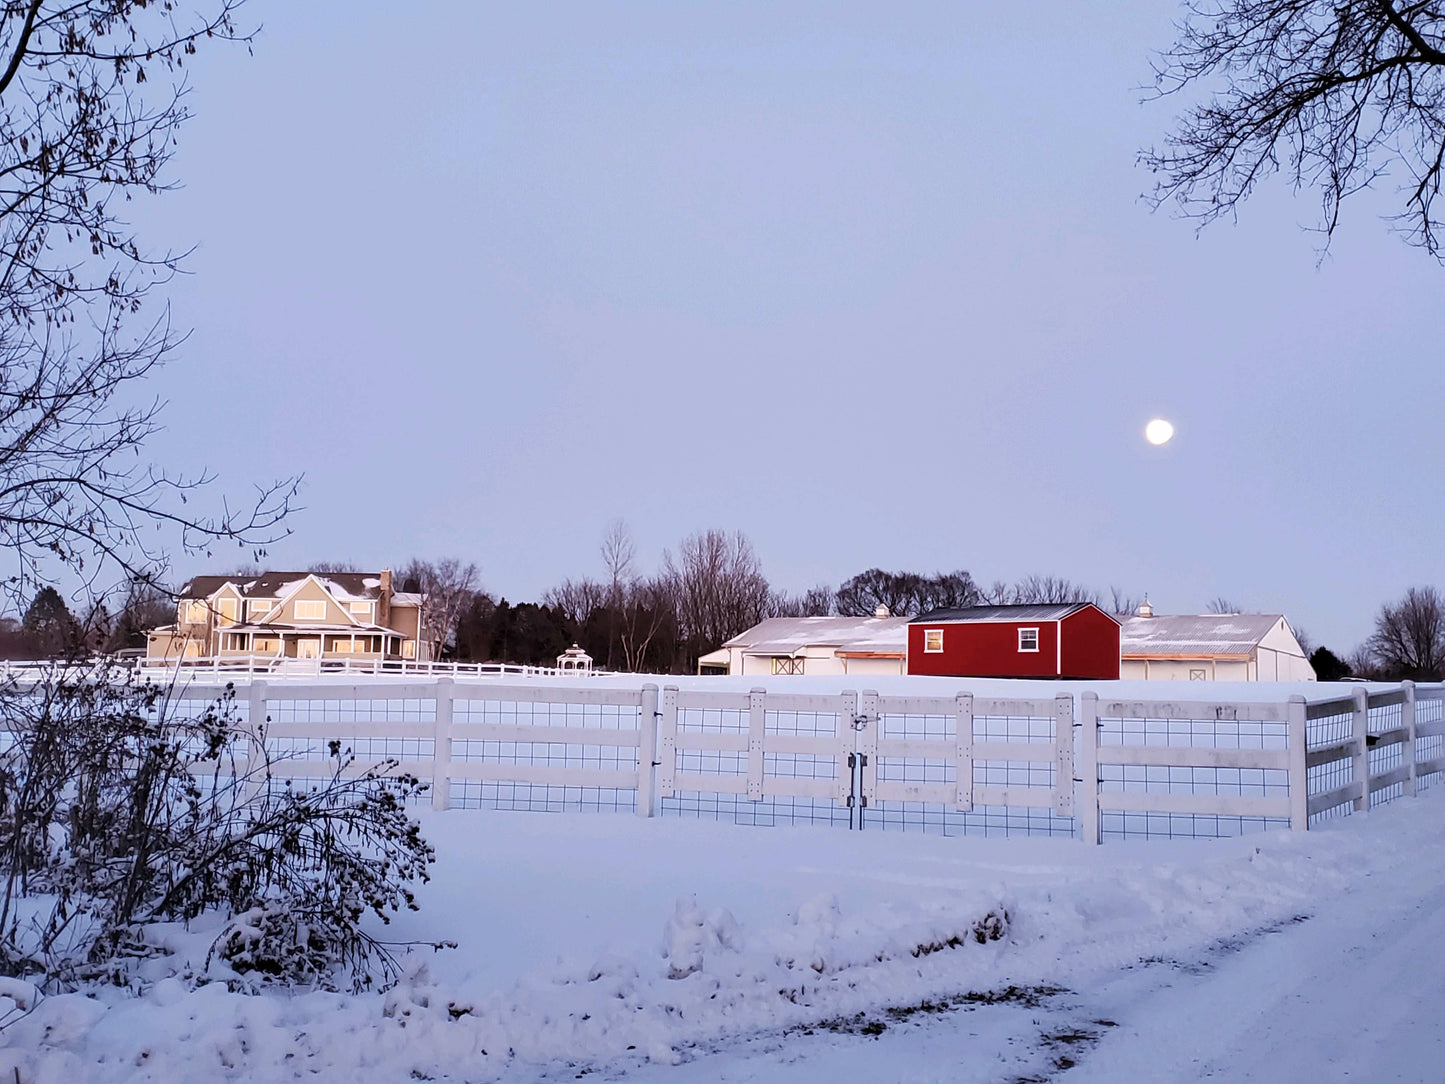 5 x 7 Postcard - Winter Farm Scene